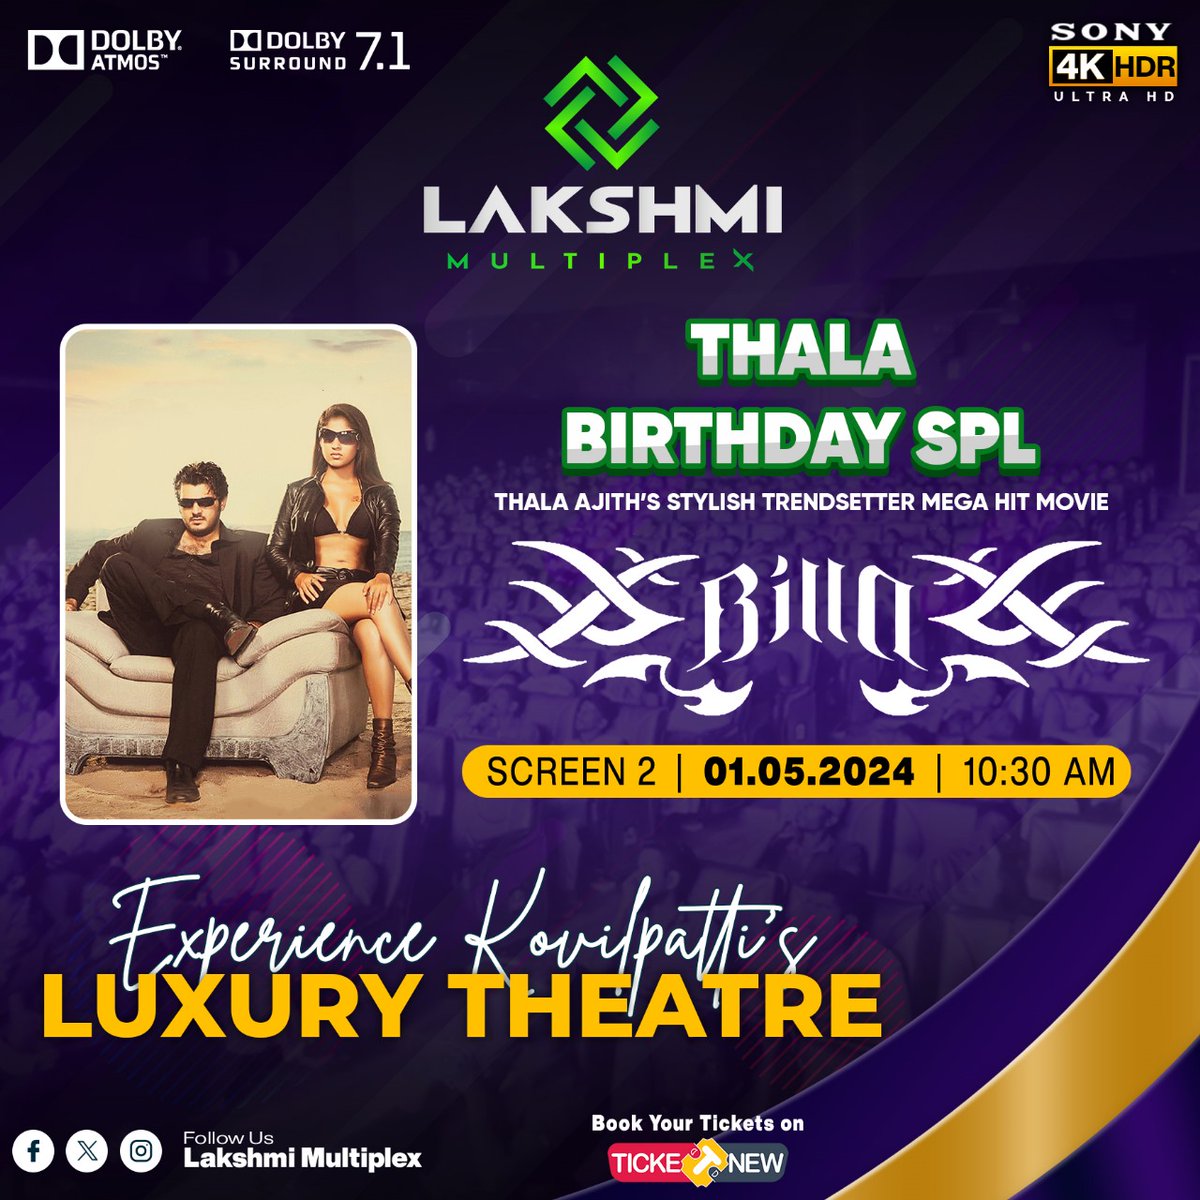 Thala Birthday Special 🥳🤩 Billa💥 @lakshmimulti On Screen 2 May 01 10:30 Am special show 😍 #Thala #ThalaAjithkumar #ThalaAjith #BillaReRelease #Billa #Lakshmicinemas